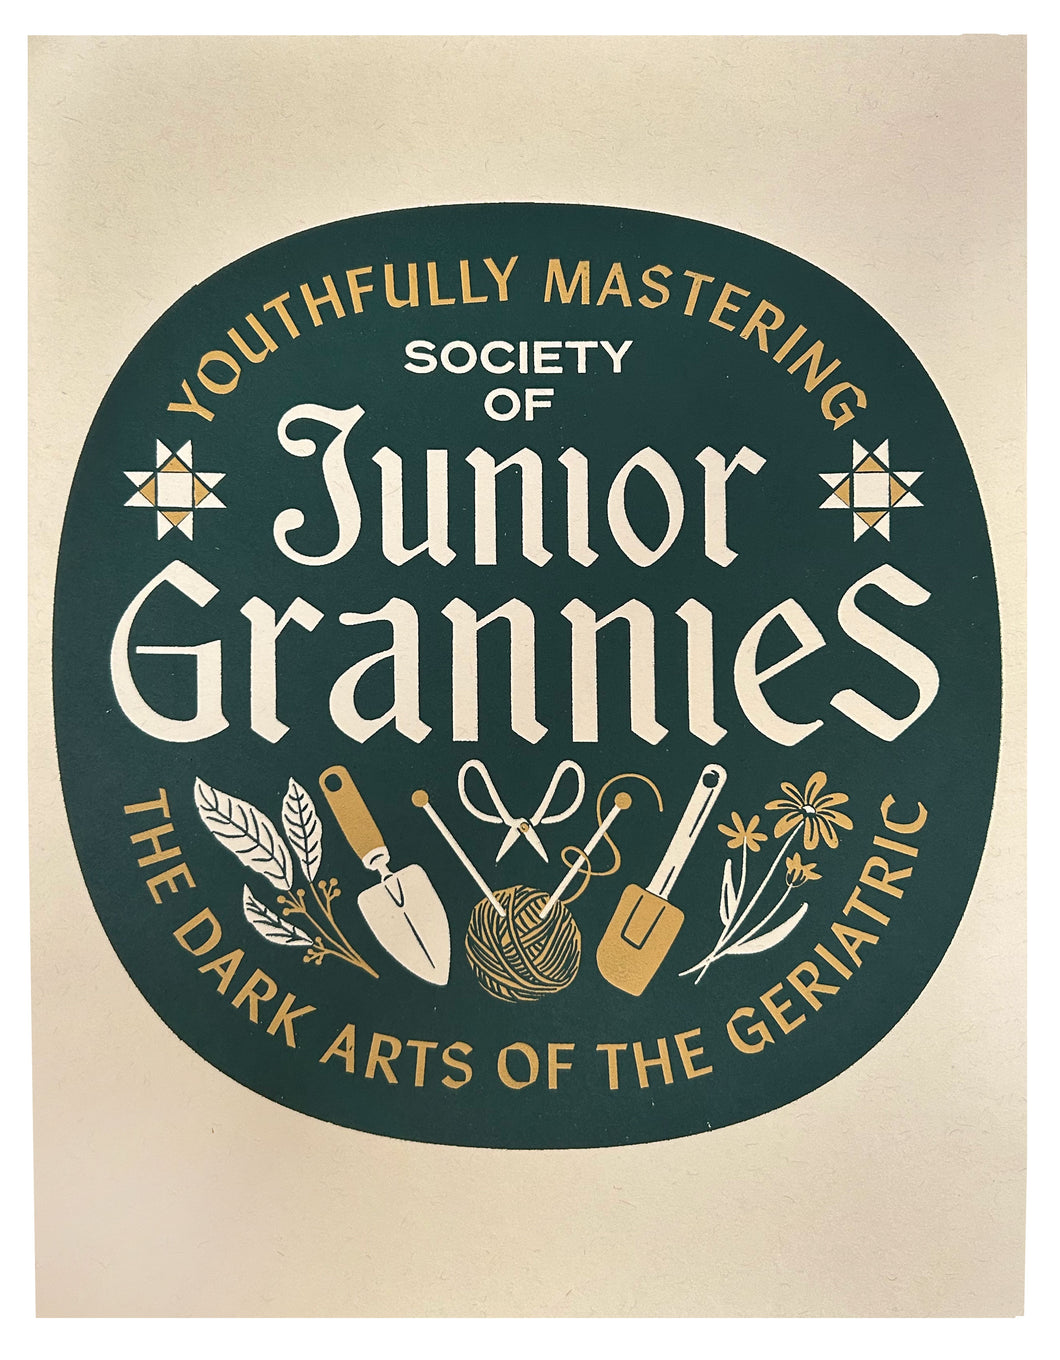 Society of Junior Grannies screenprint